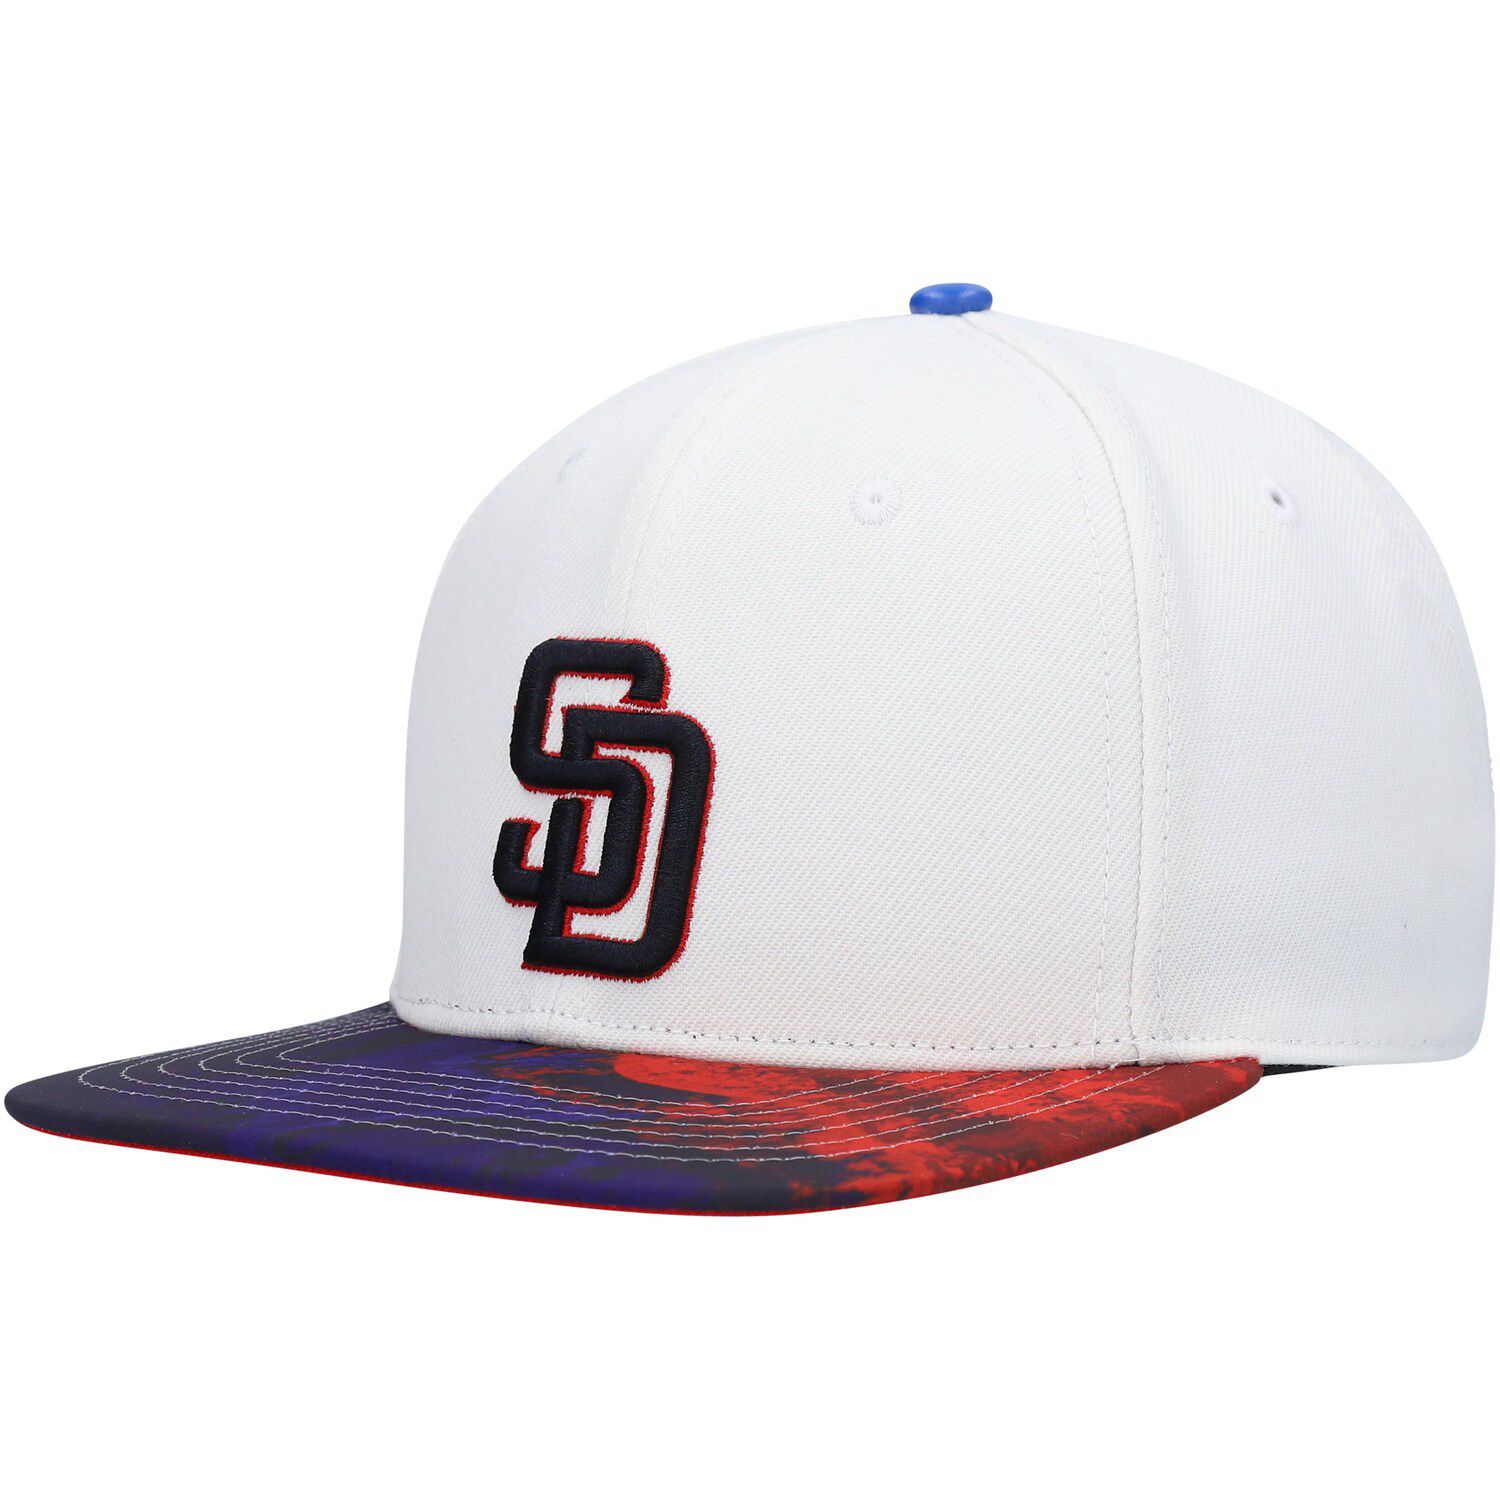 Image for Unbranded Men's Pro Standard White San Diego Padres Dip-Dye Snapback Hat at Kohl's.